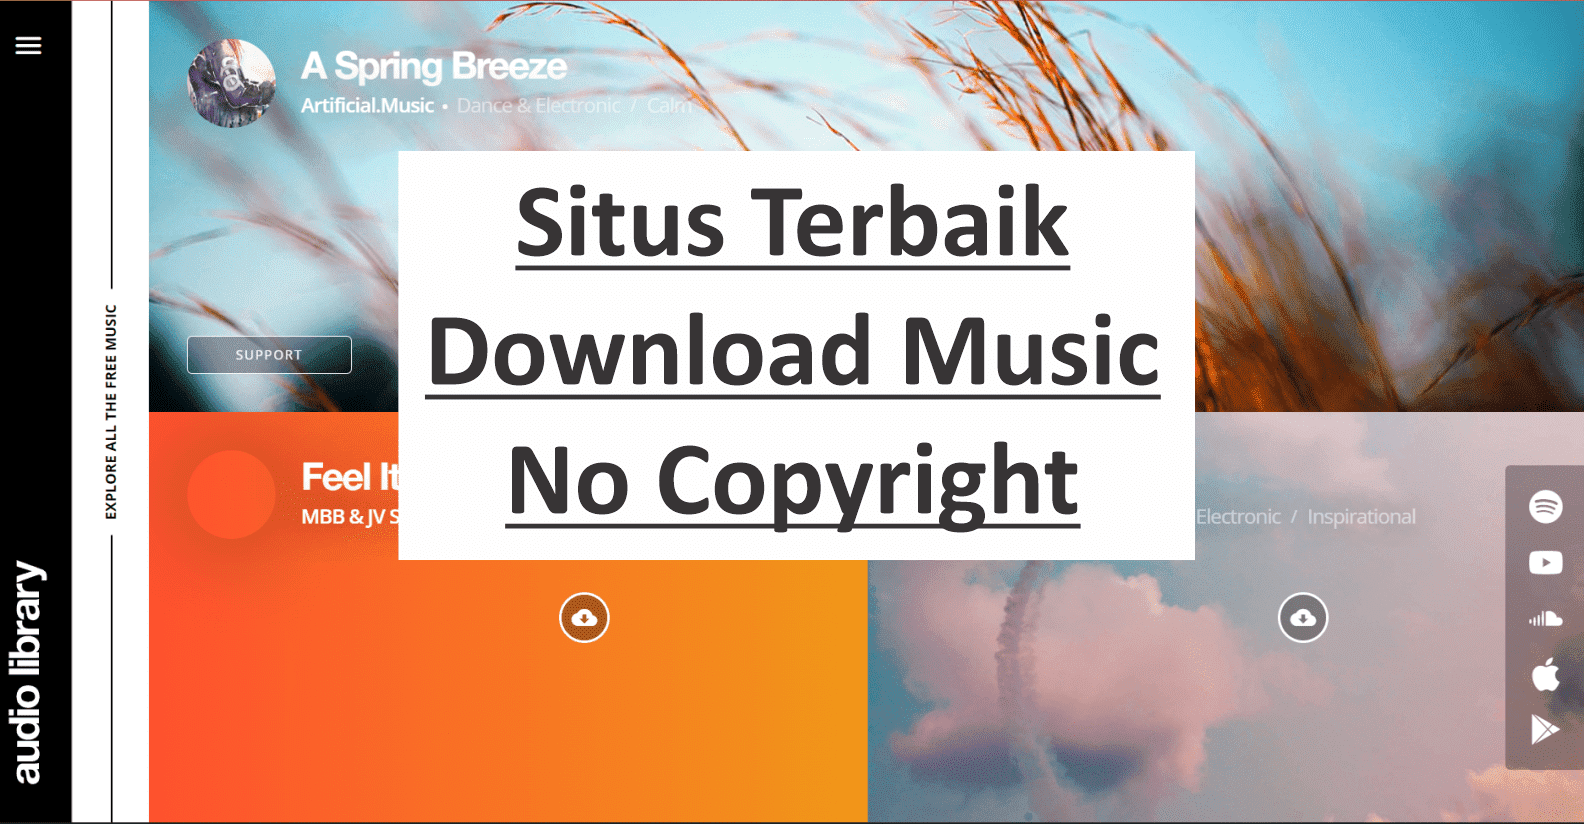 music no copyright mp3